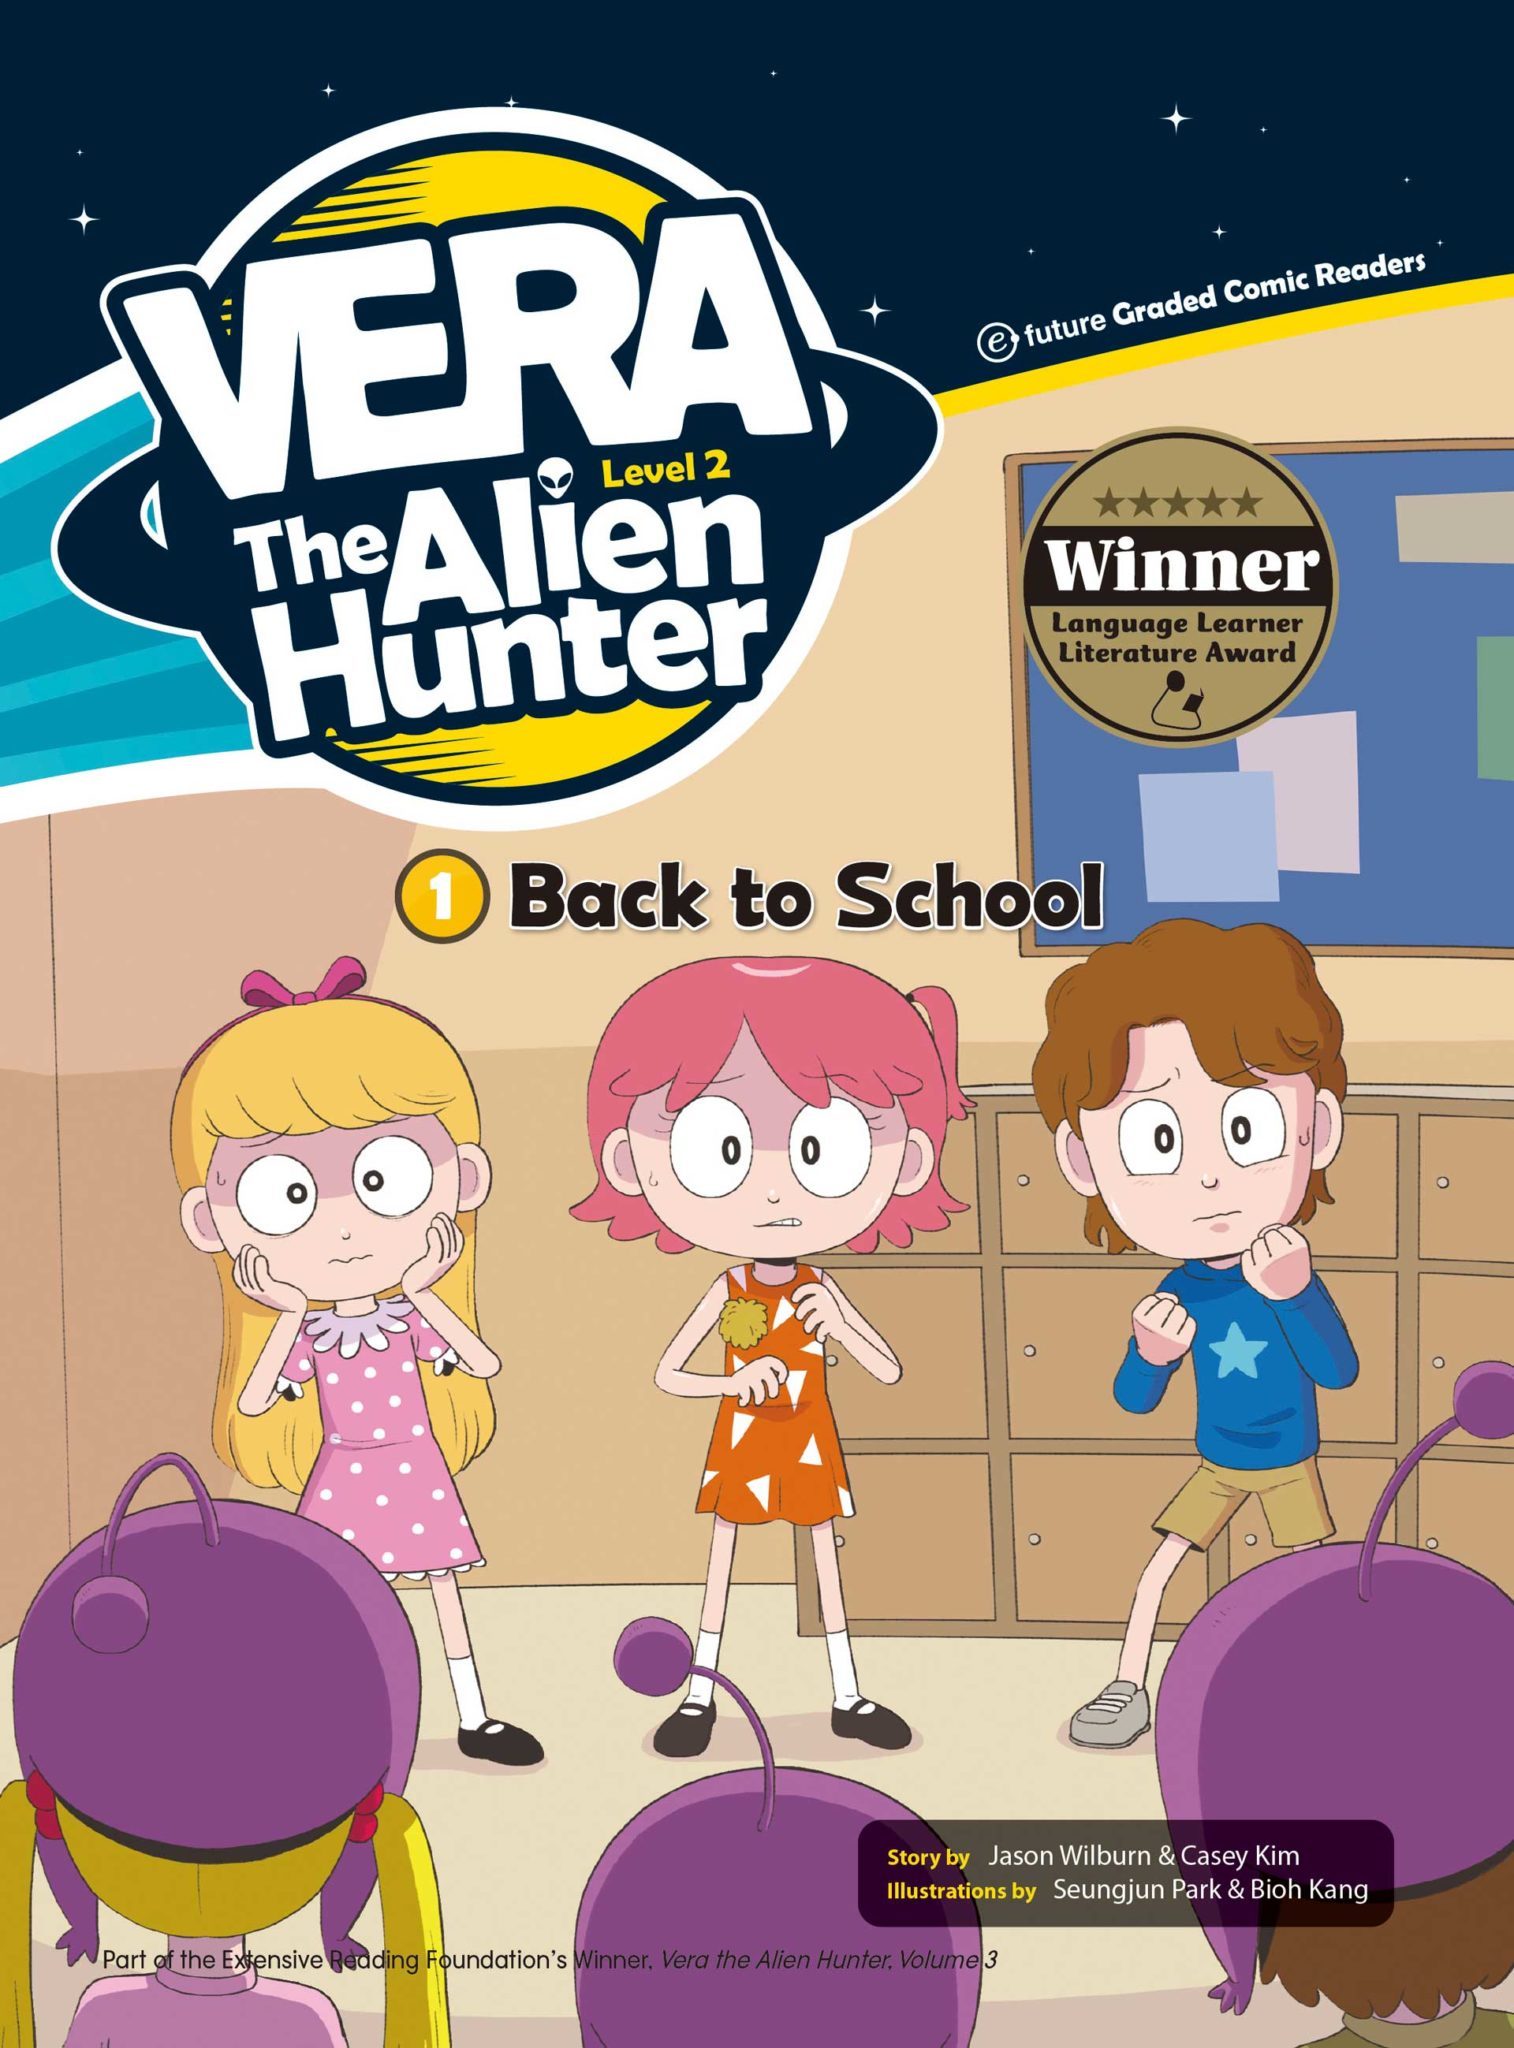 Vera Single Books - Series Two